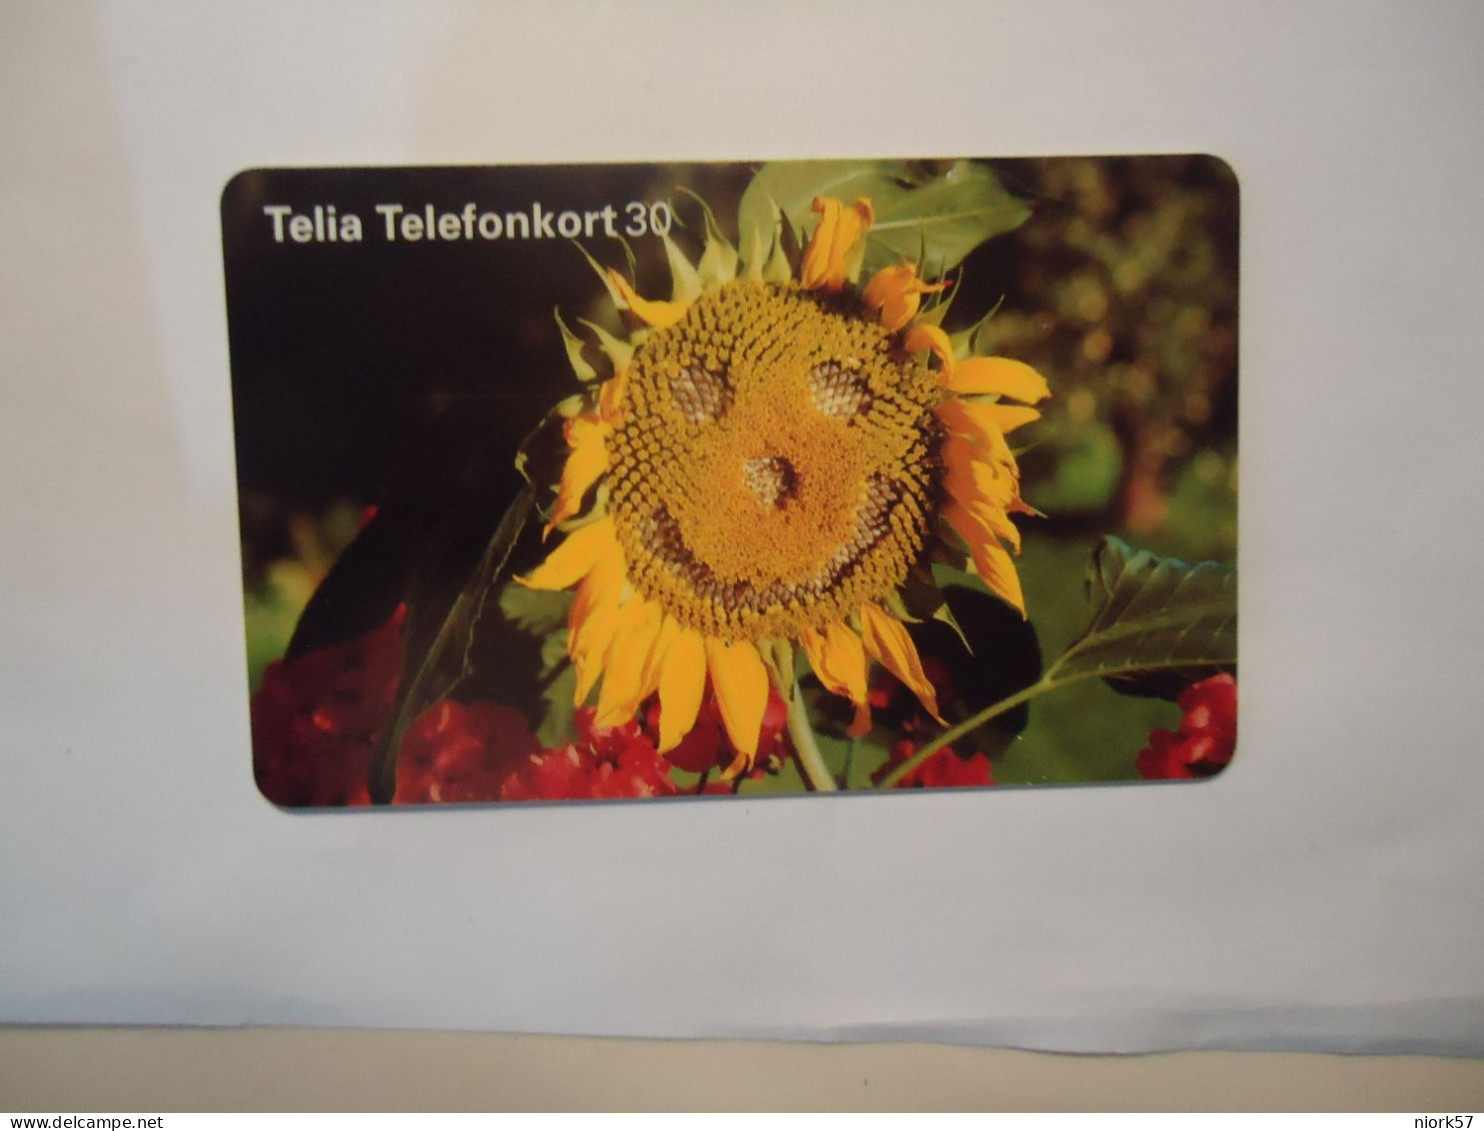 SWEDEN  USED  CARDS  FLOWERS PLANTS - Bloemen